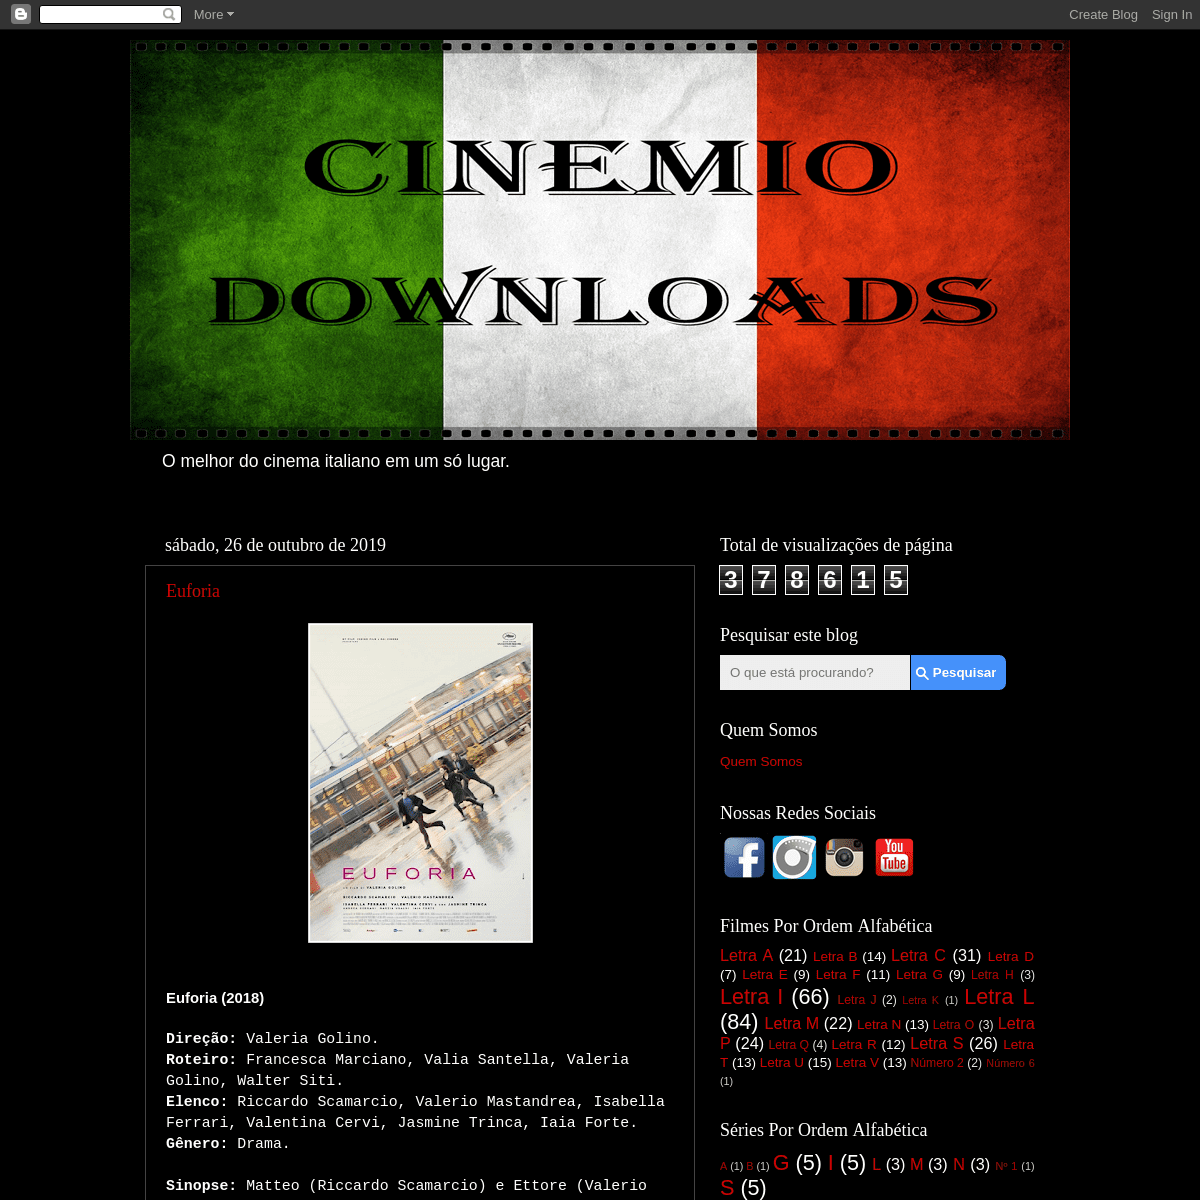 A complete backup of cinemiodownloads.blogspot.com